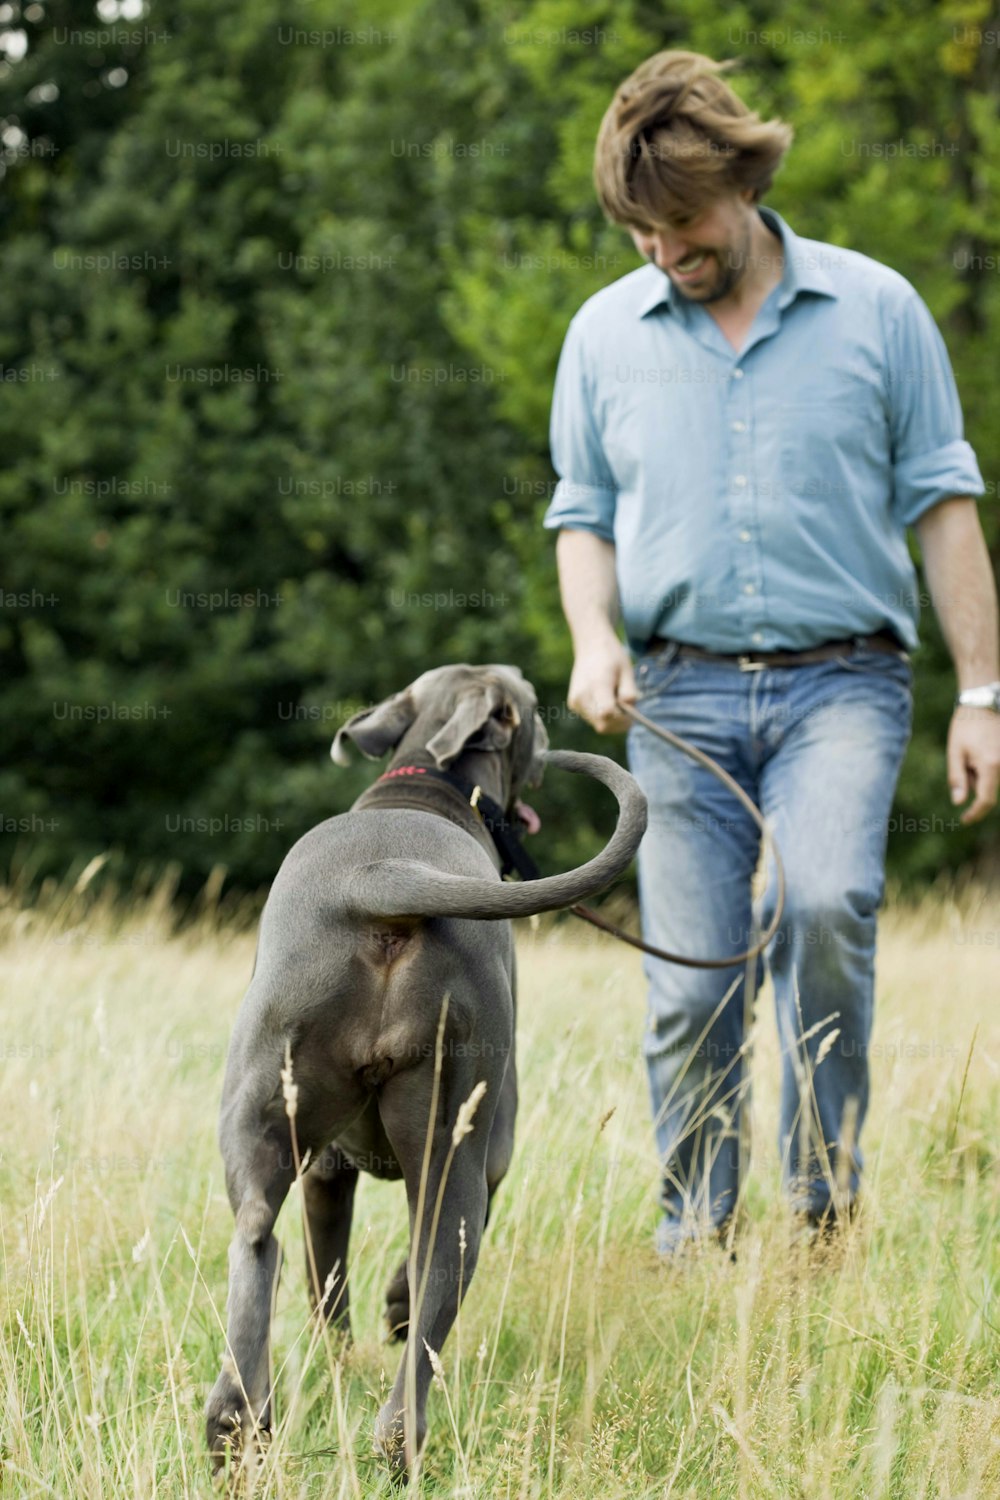 a man walking a dog on a leash in a field